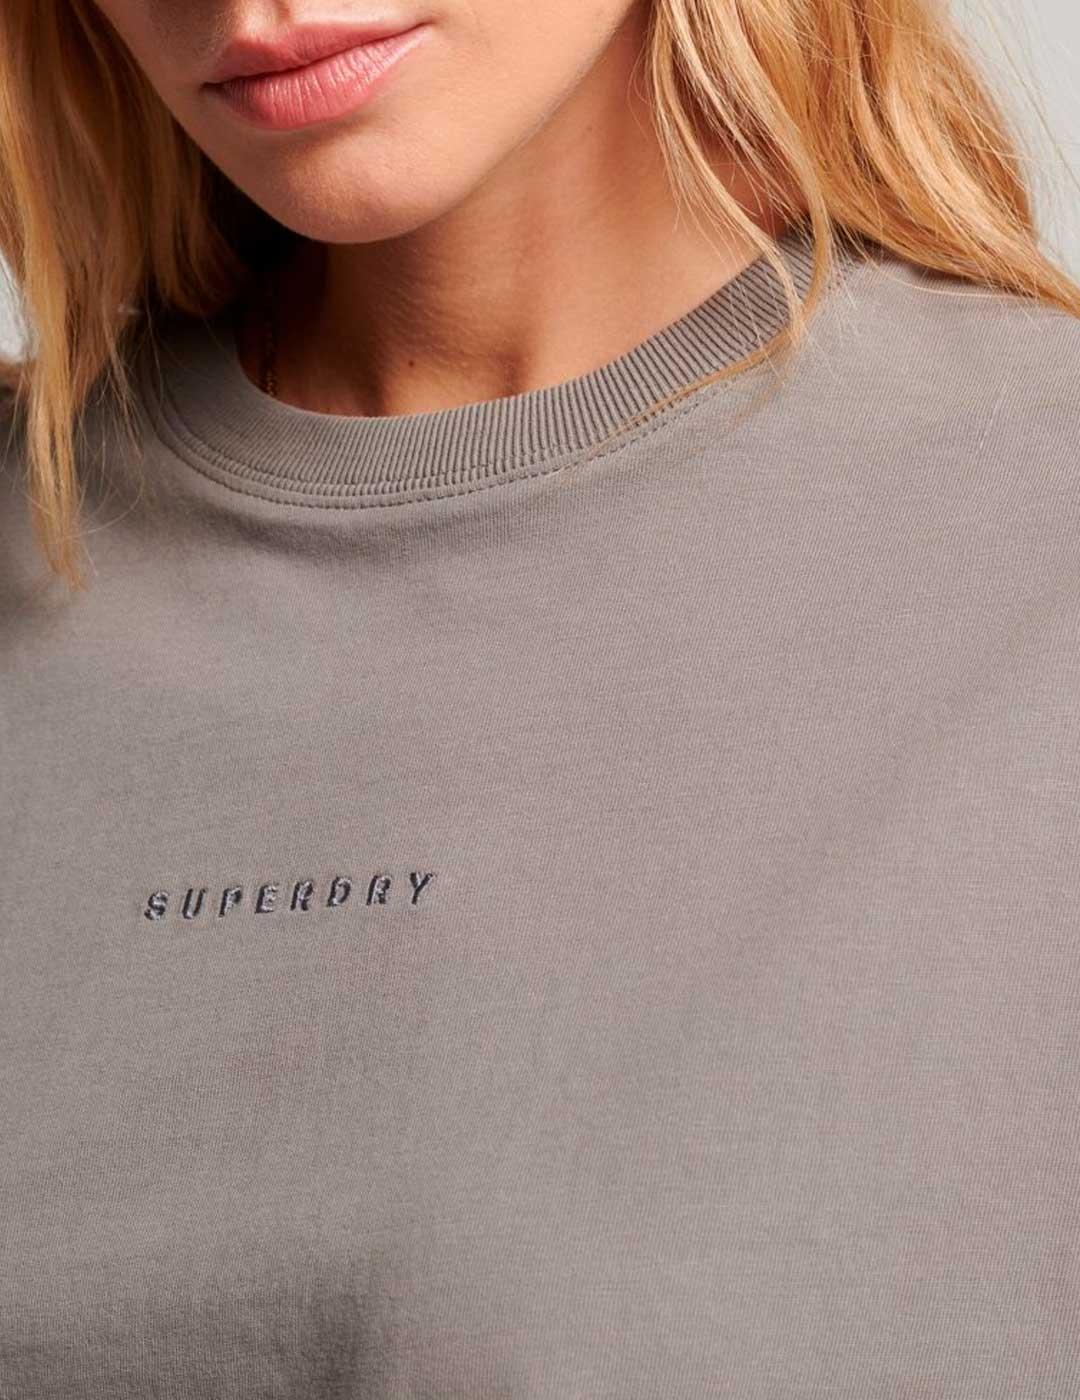 Camiseta Superdry Code Surplus Micro gris para mujer